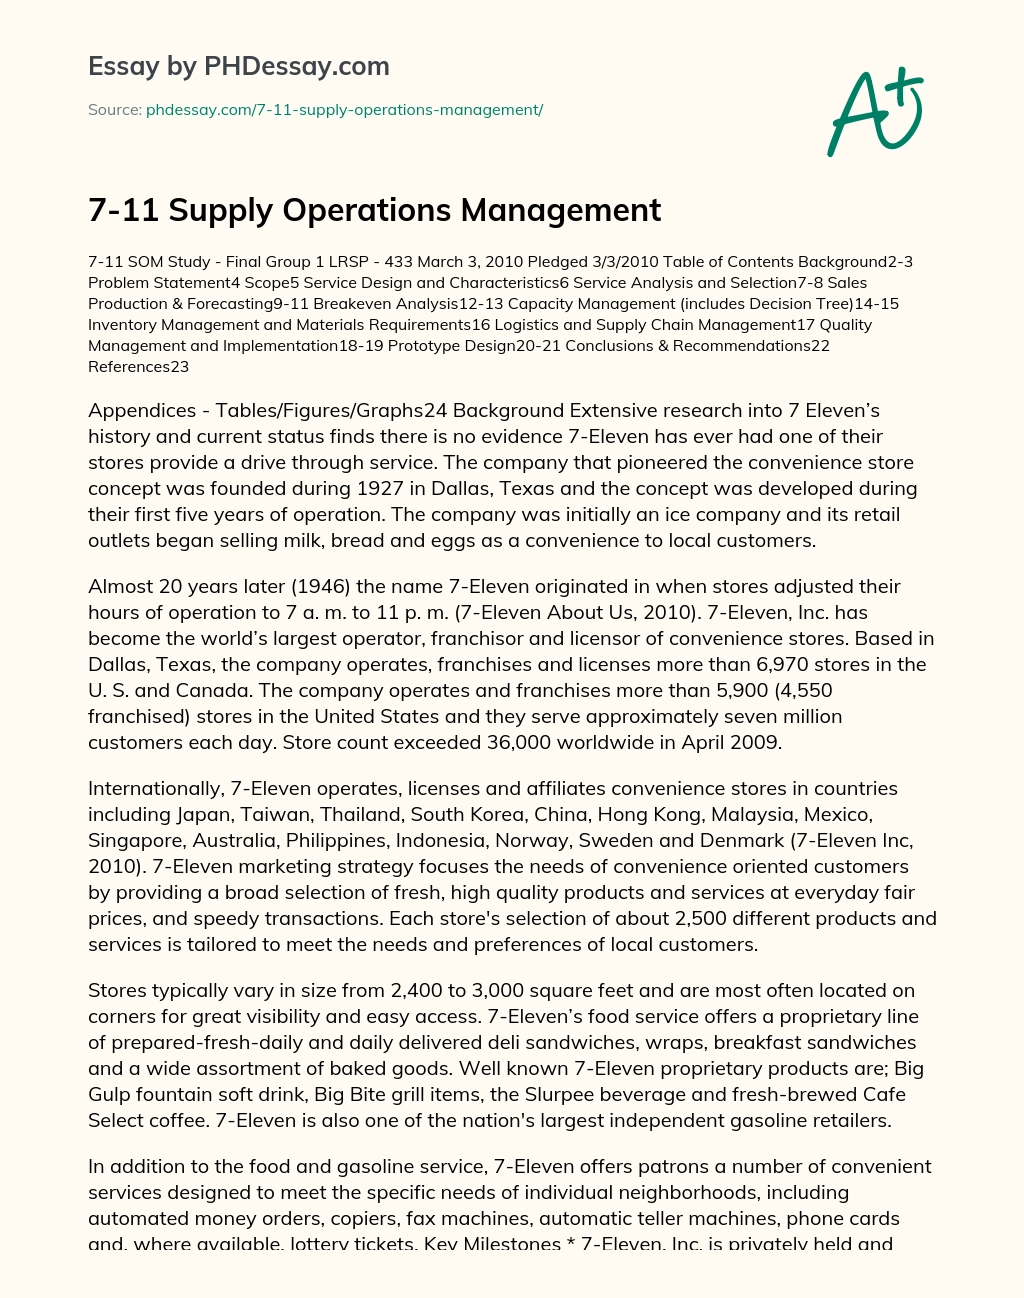 7-11 Supply Operations Management essay